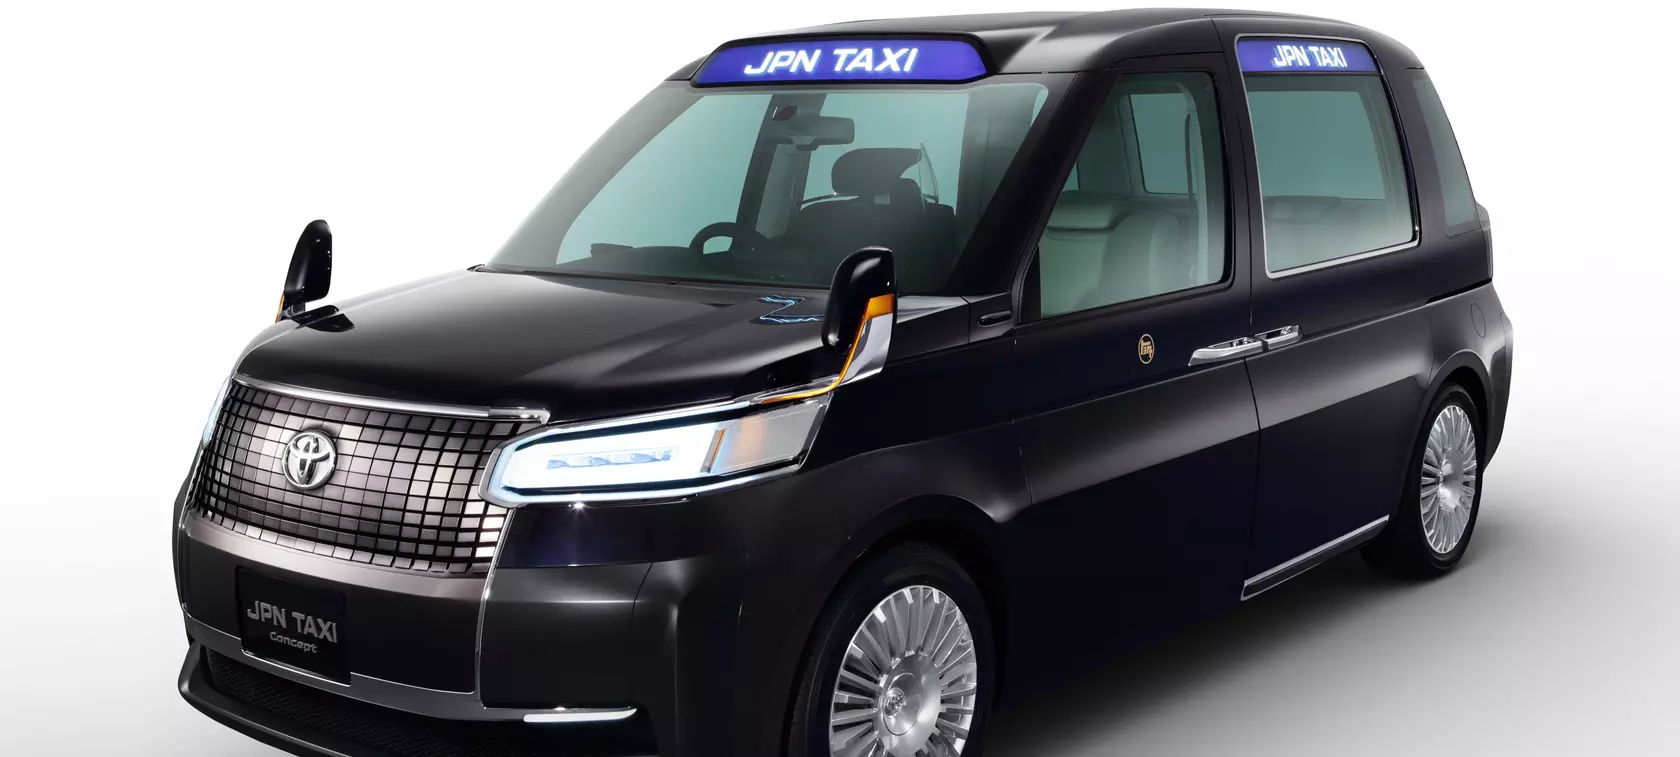 Toyota JPN Taxi - dreams come true